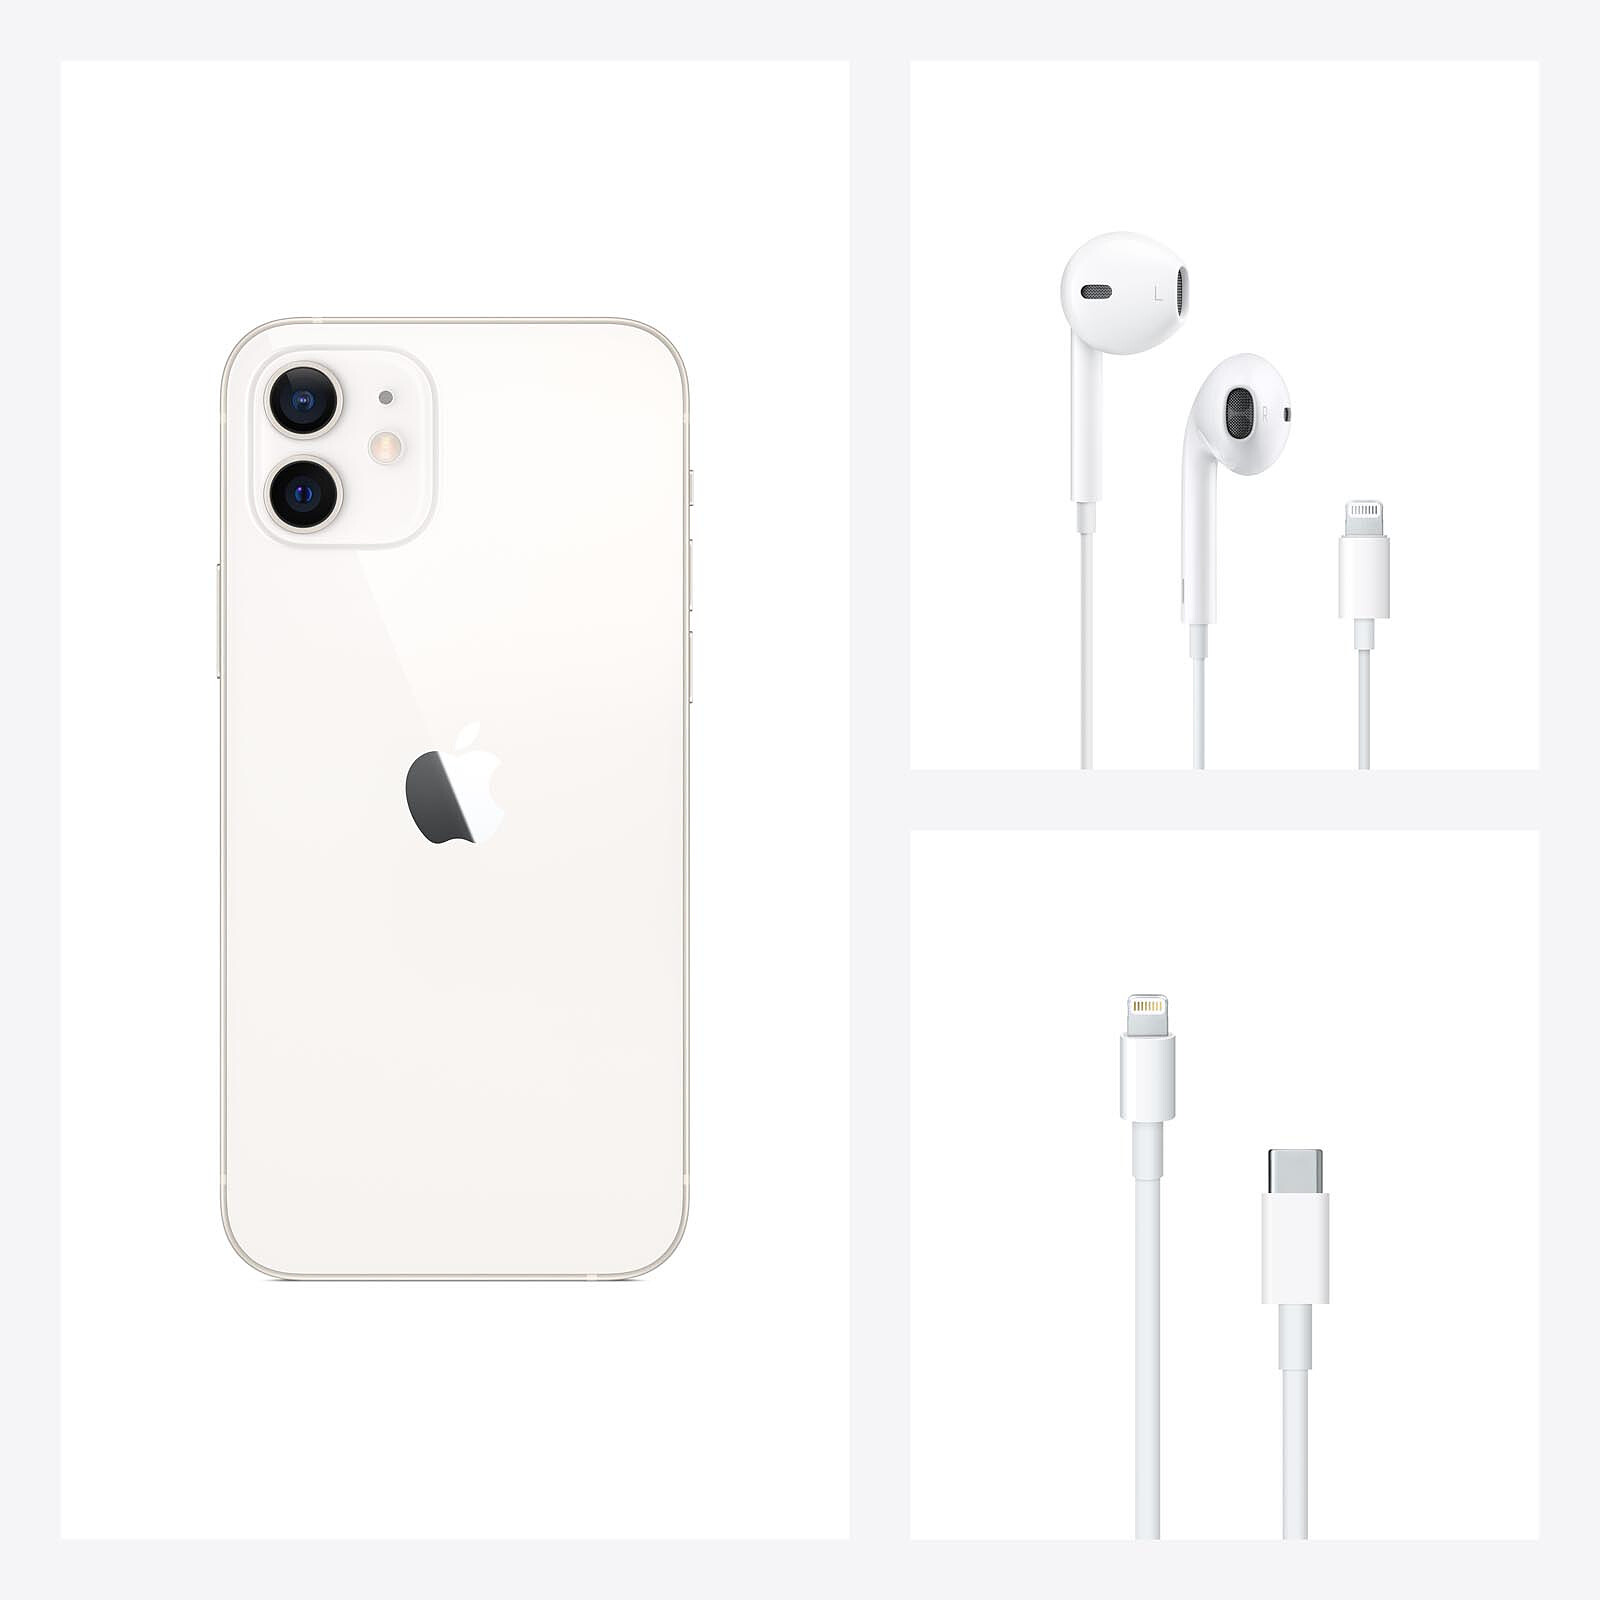 Apple iPhone 12 mini 128 GB White - Mobile phone & smartphone